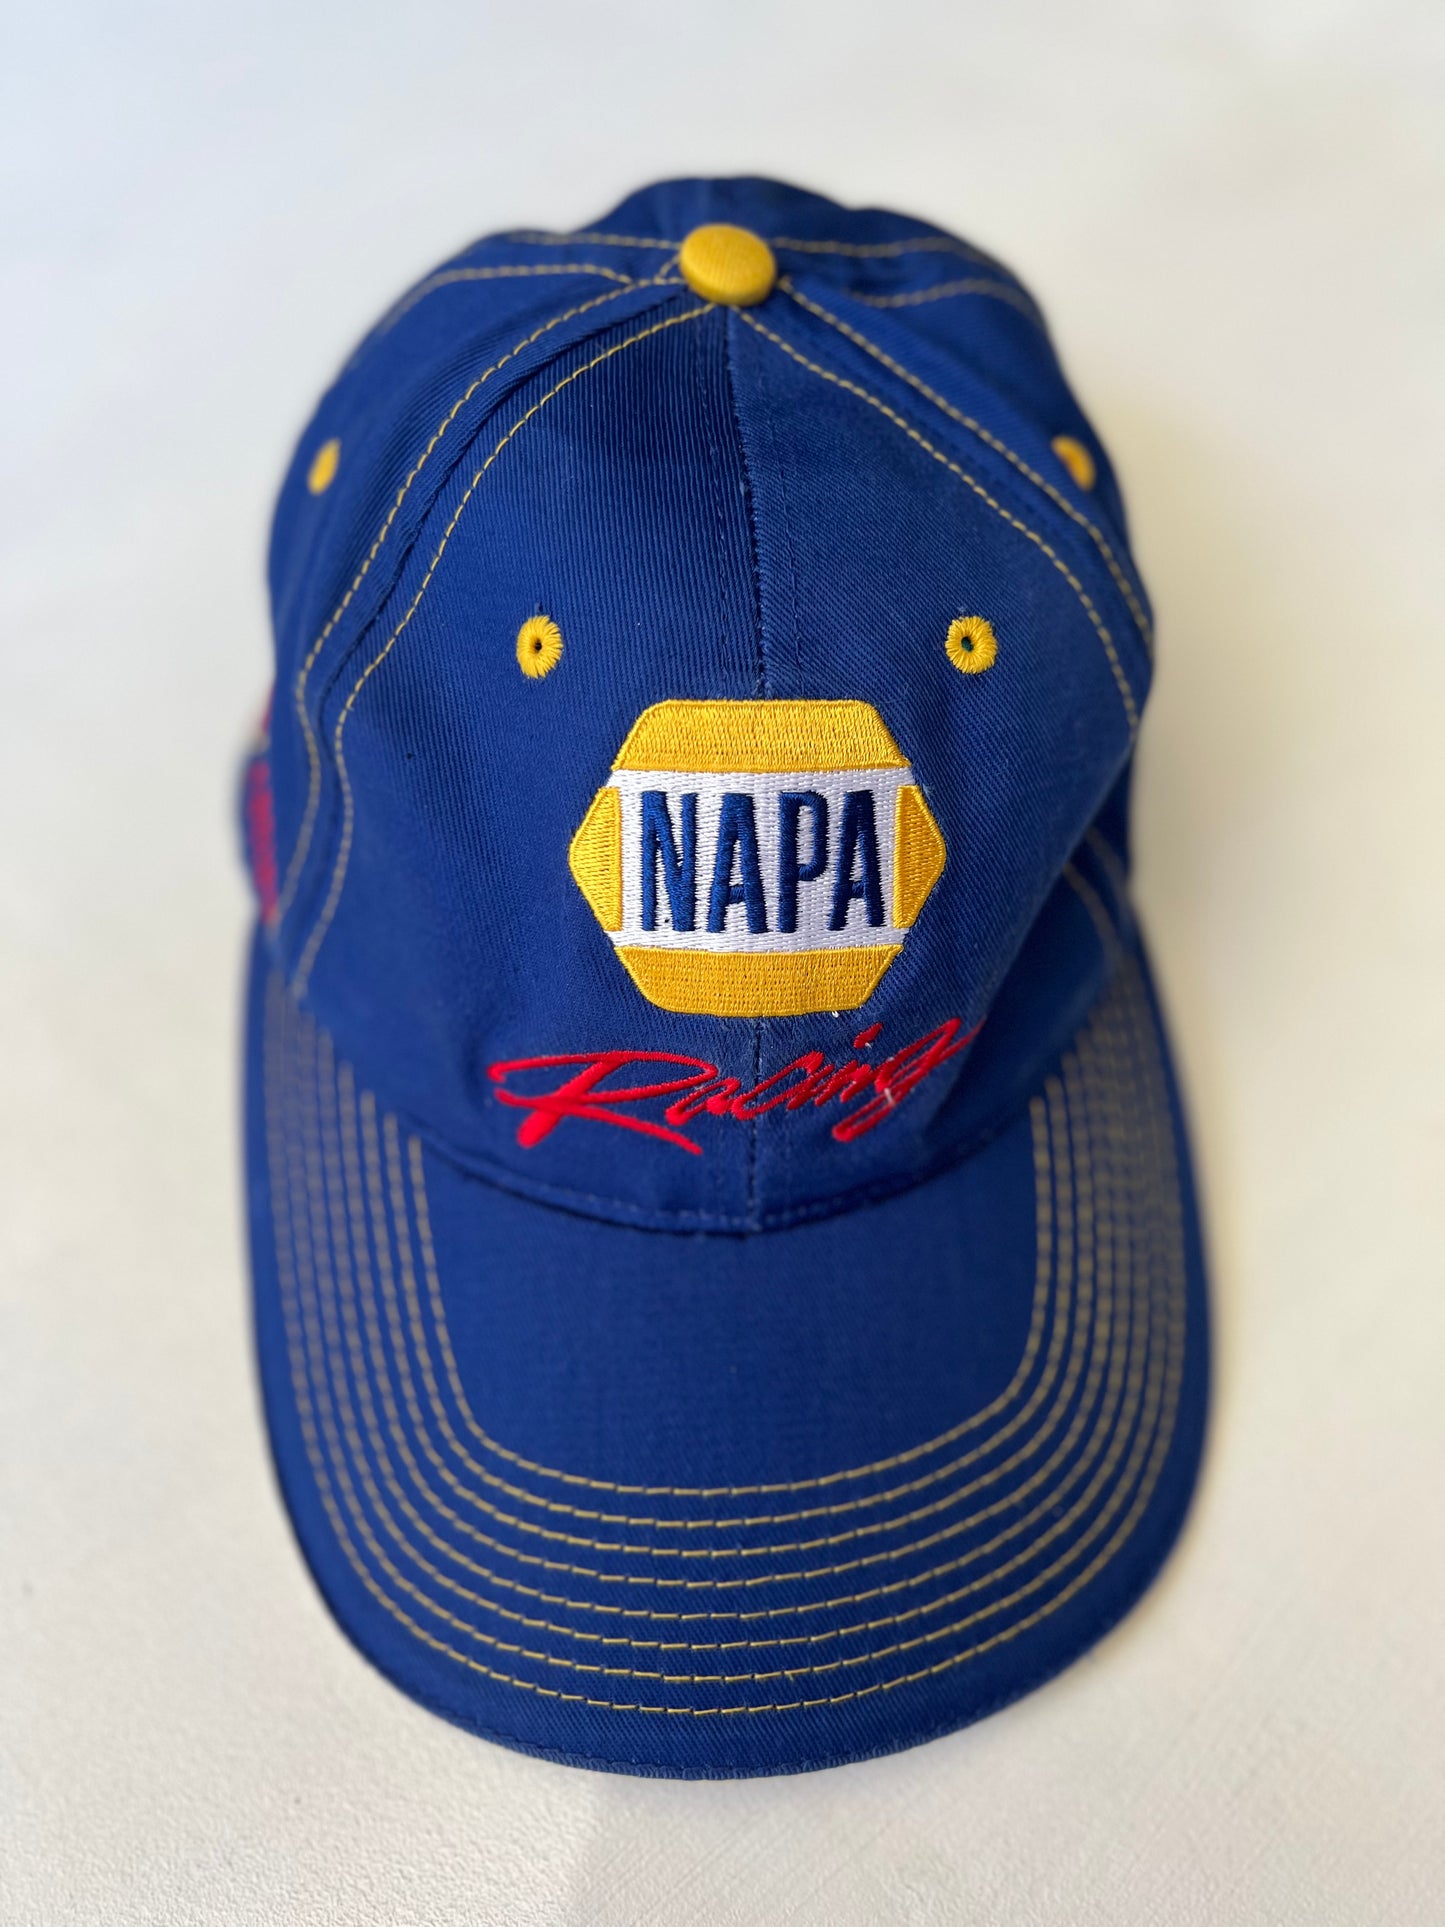 Napa Racing Hat - Blue